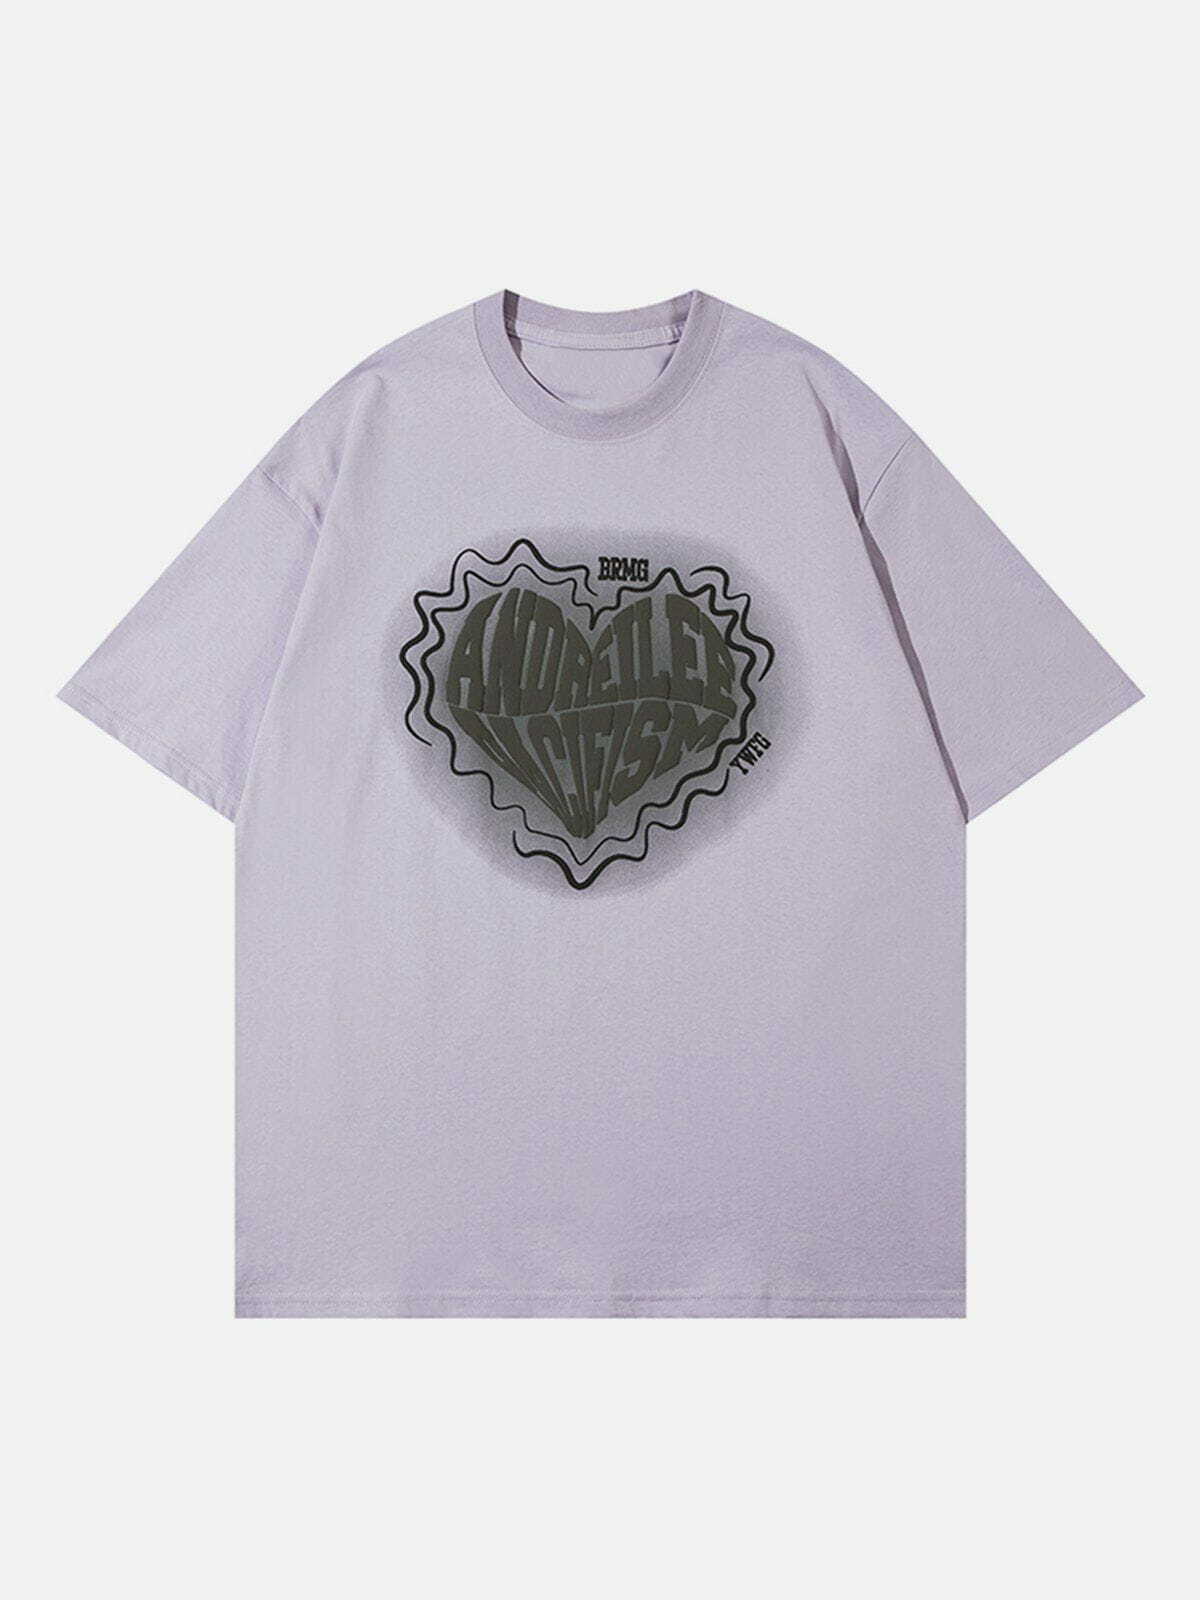 foam heart print tee quirky & vibrant streetwear 3703